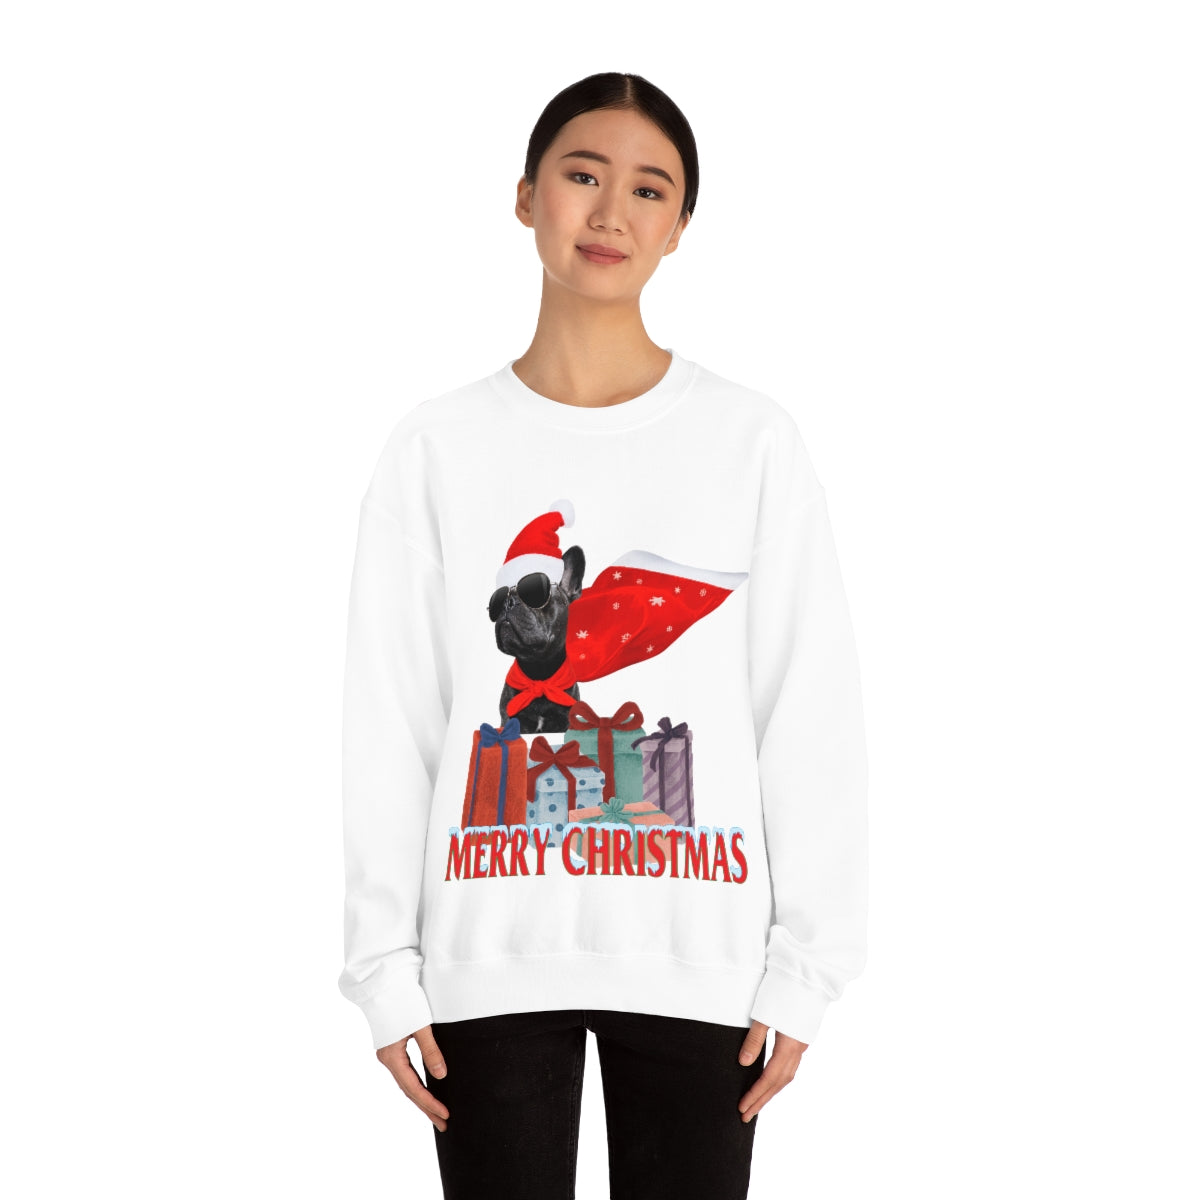 French Bulldog Christmas Sweater - Santaland